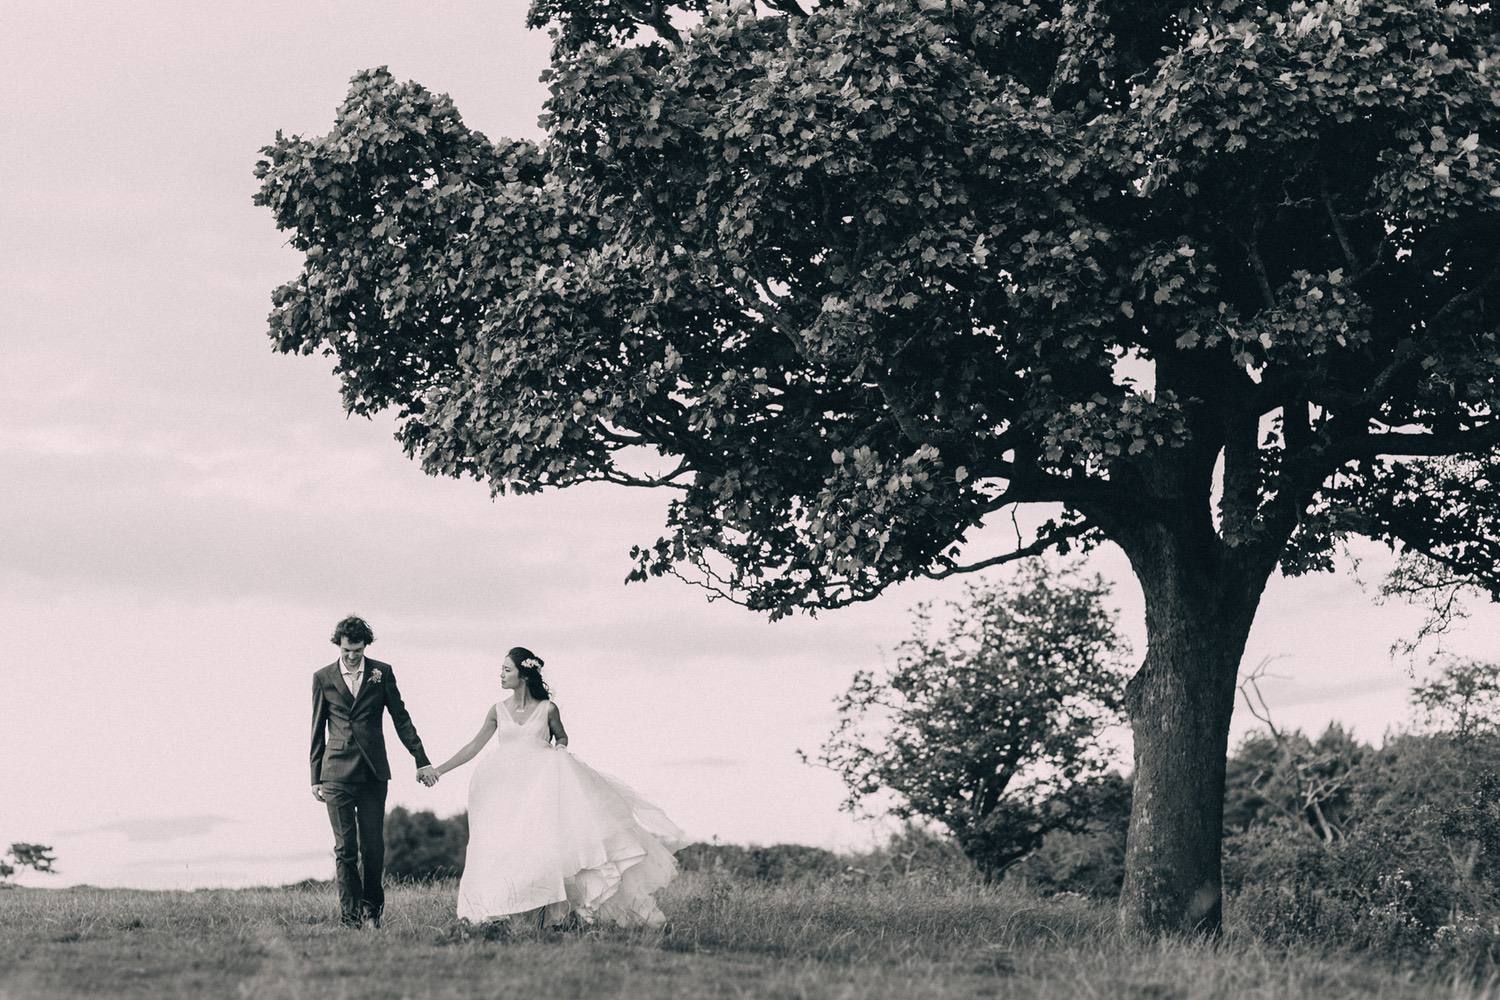 Doxford-Barns-Wedding-Photography-3.jpg